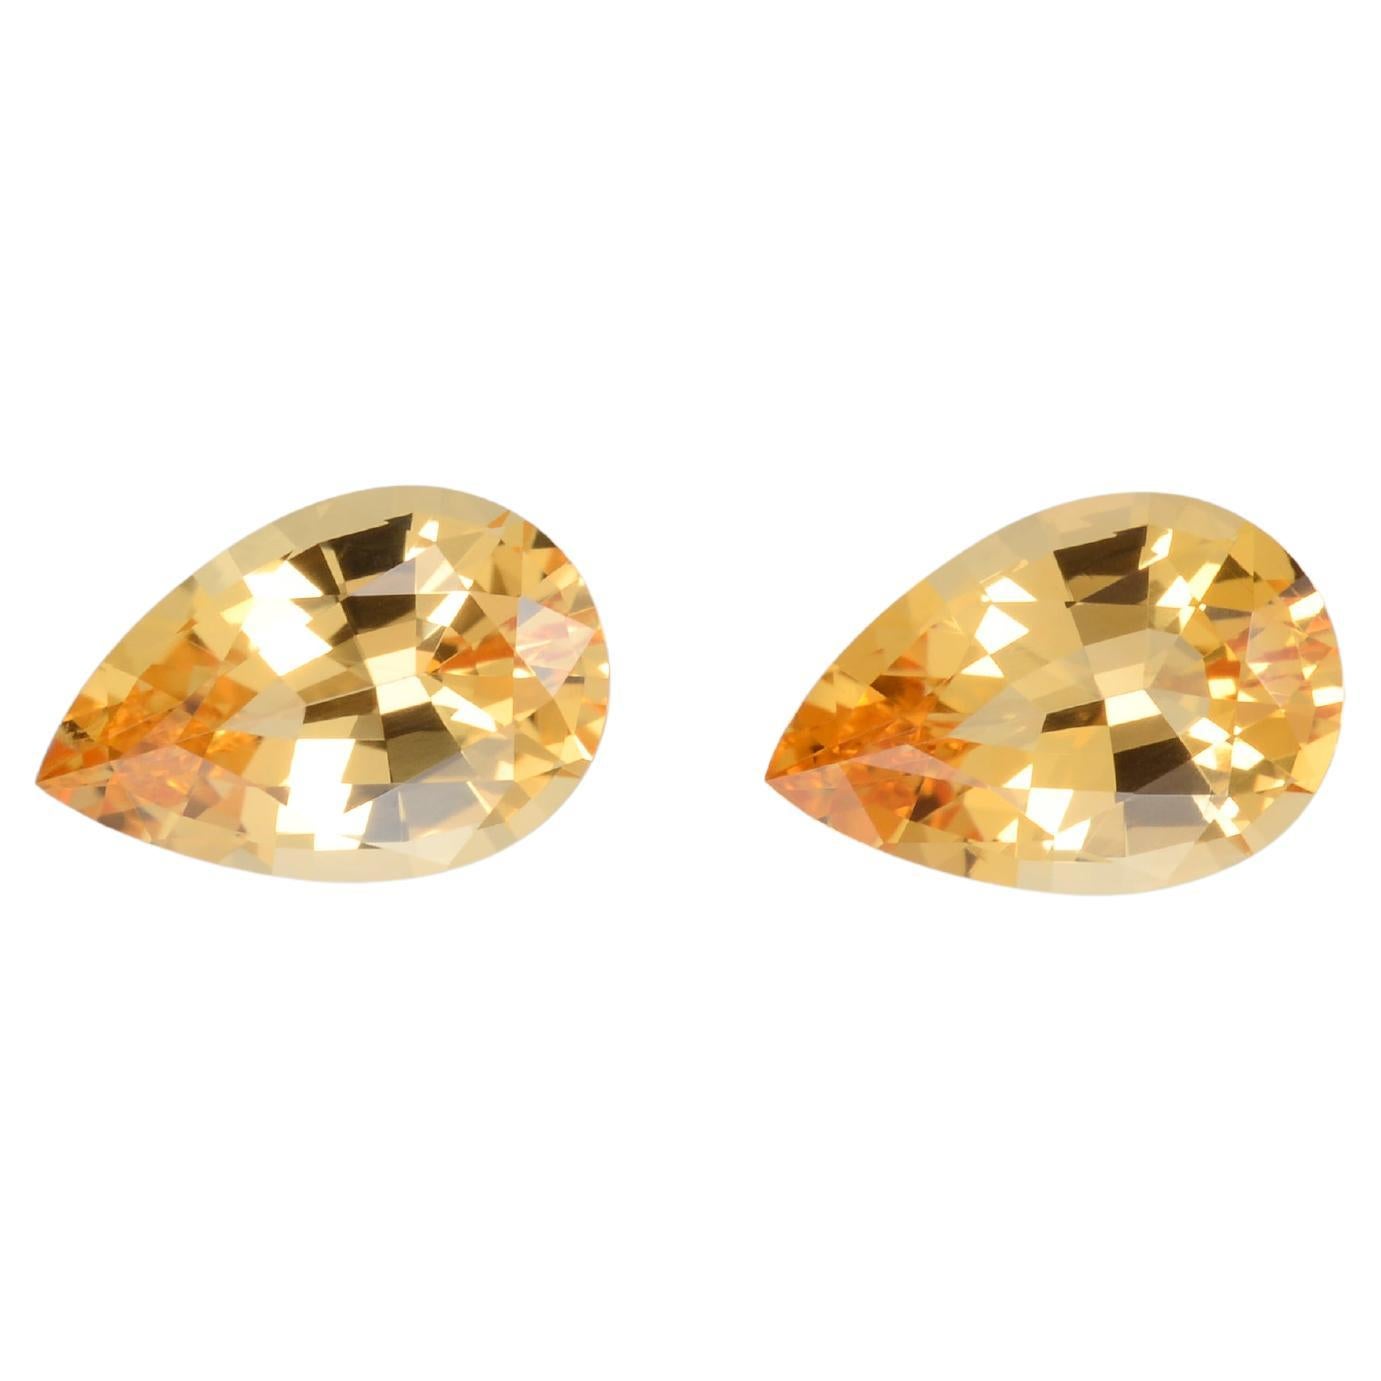 Imperial Topaz Earrings Loose Gemstones Unmounted 2.53 Carat Yellow Pair For Sale